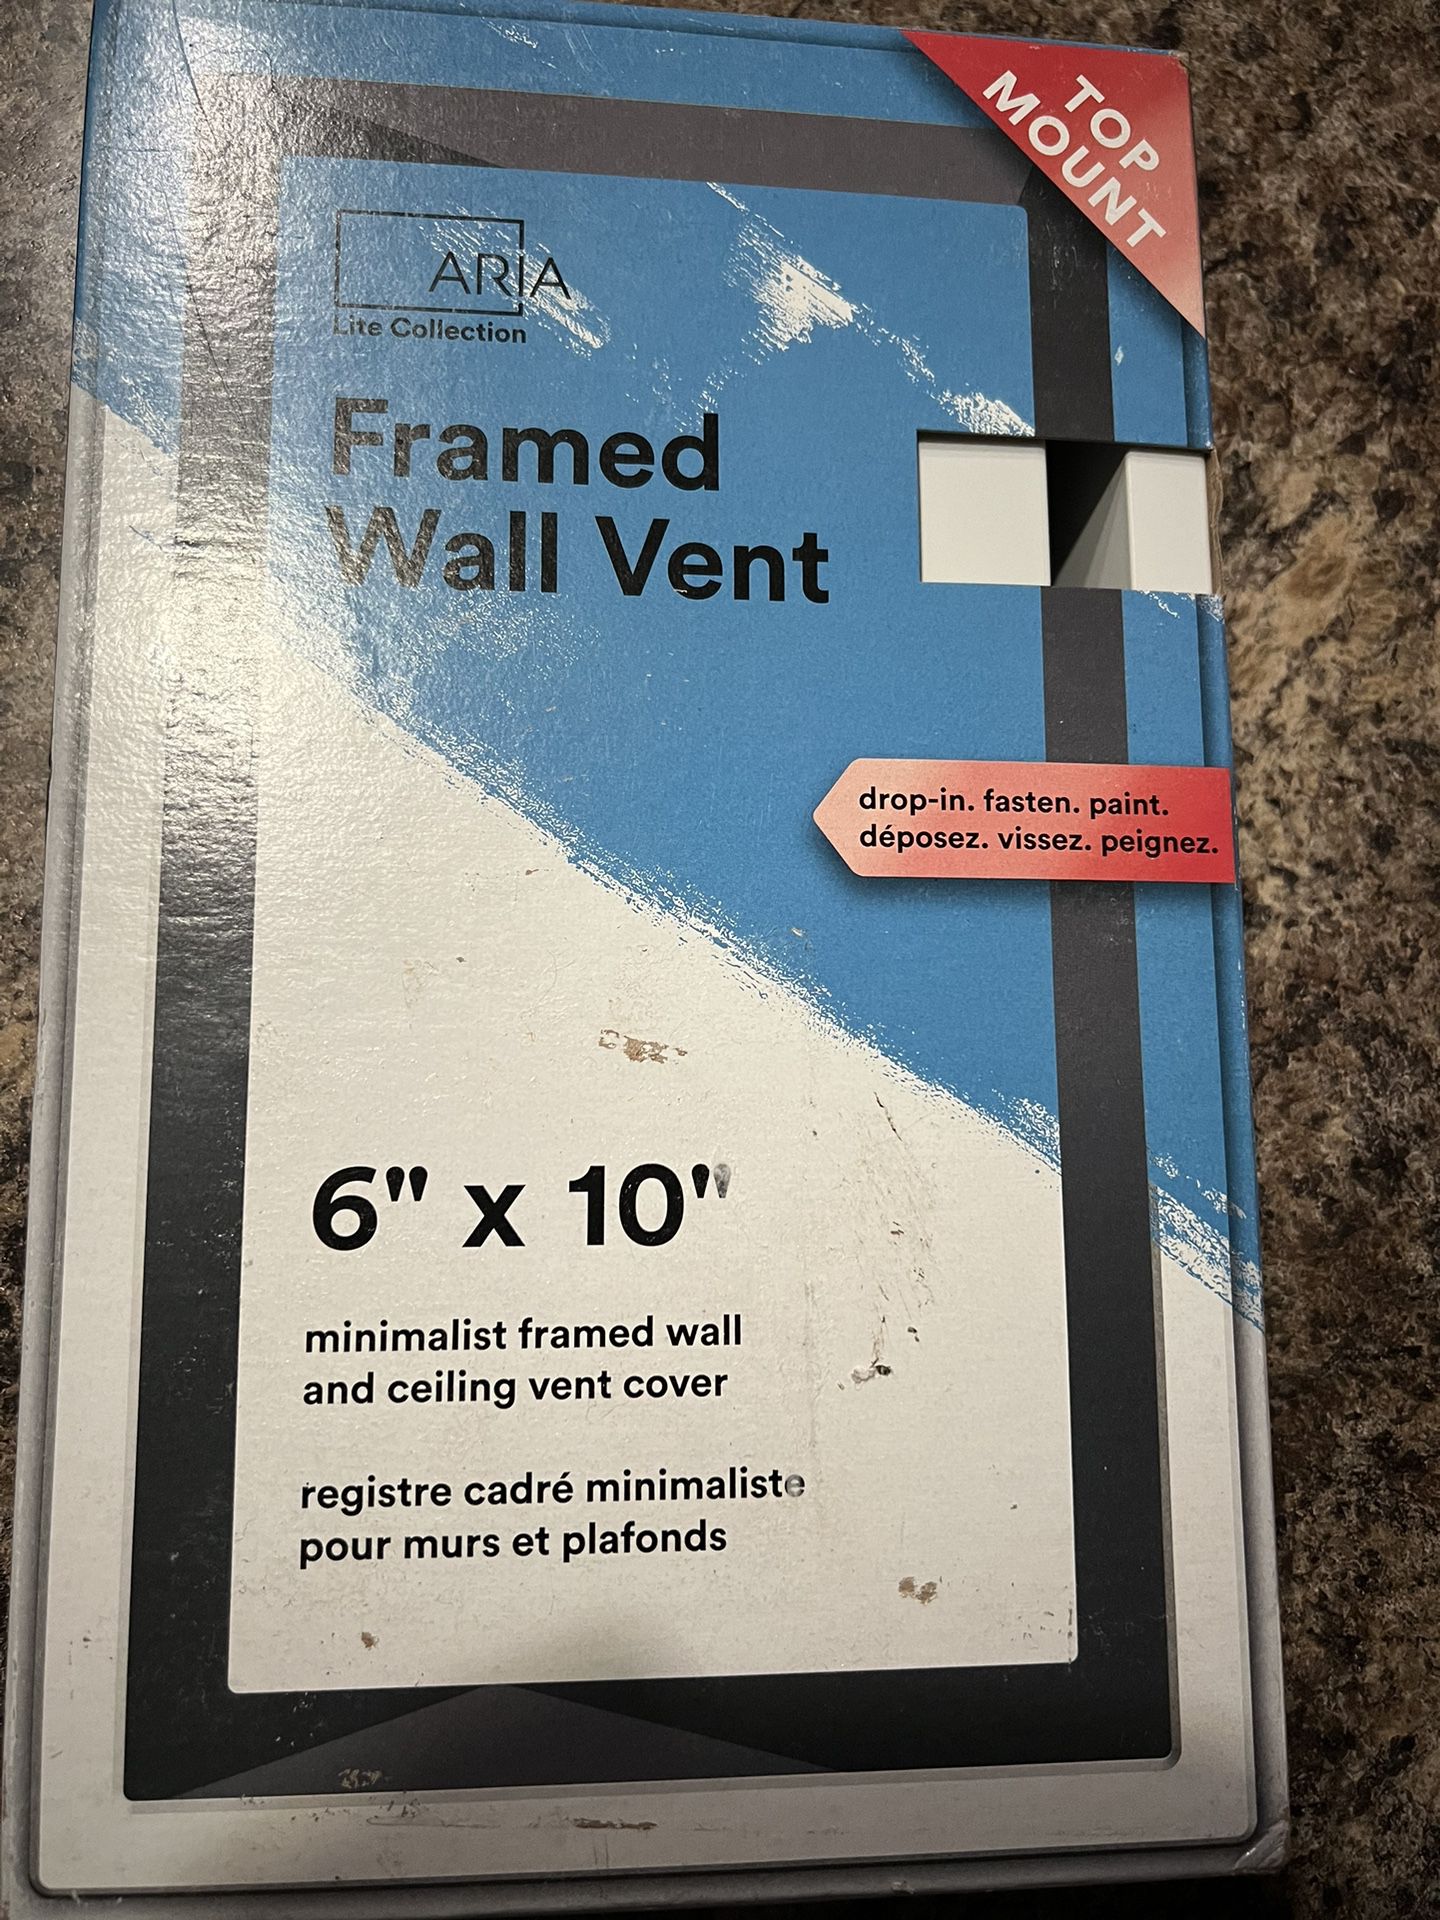 Aria Vent 10x6, Wall Vent Lite, 6”x10”